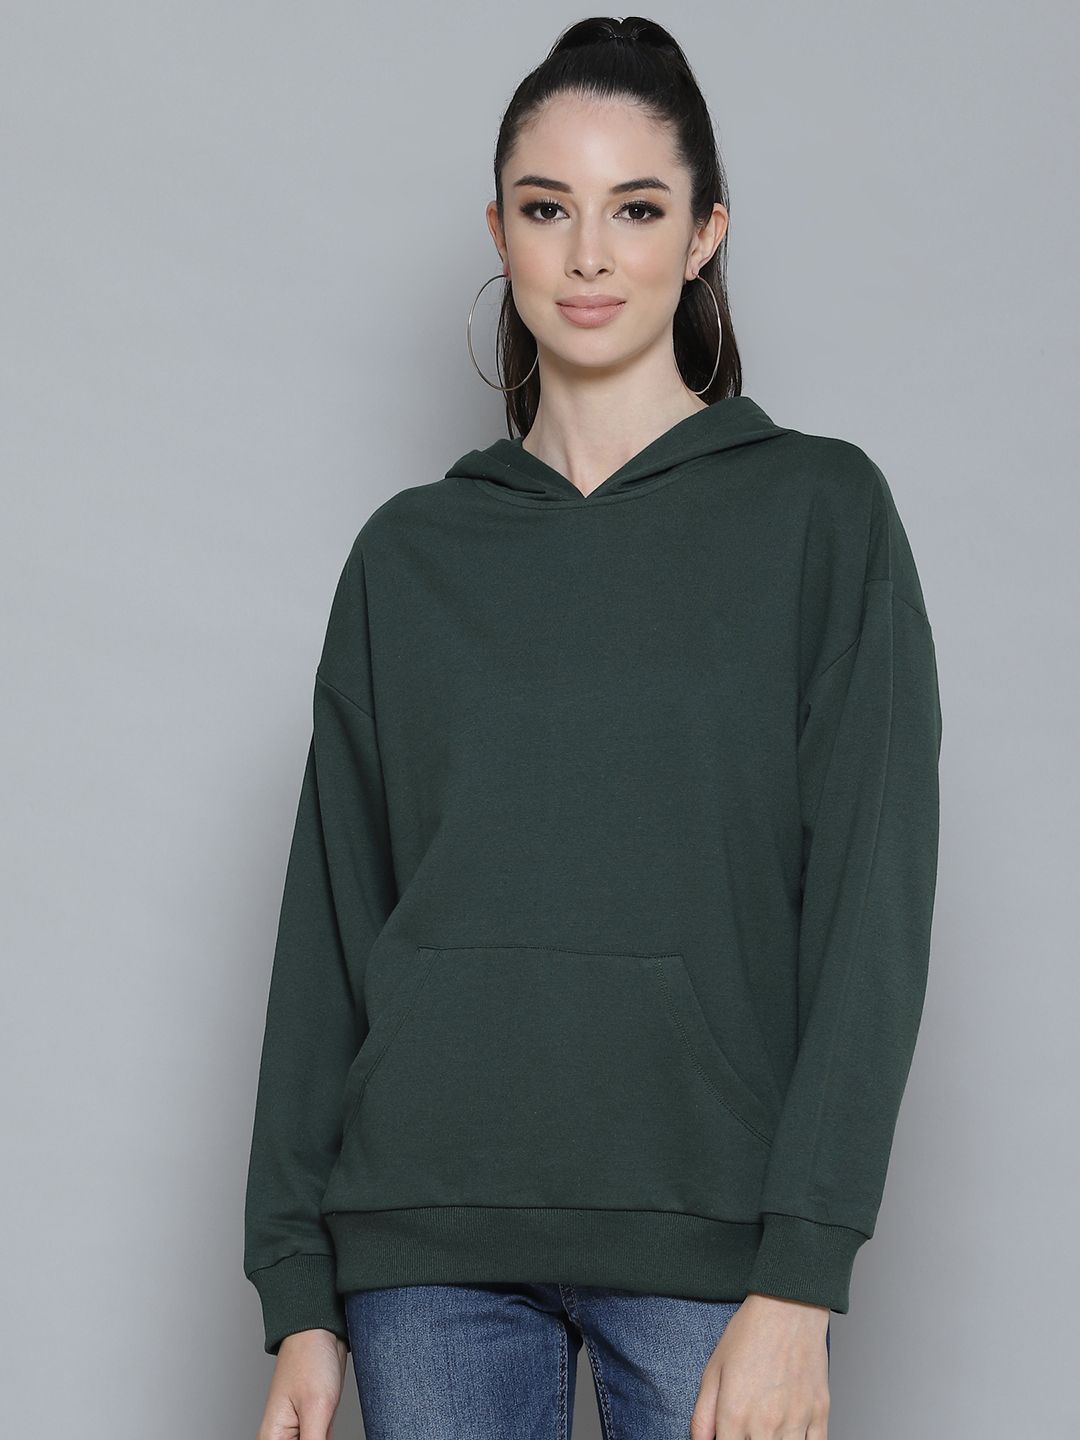 Femella Women Green Solid Hooded Sweatshirt Price in India